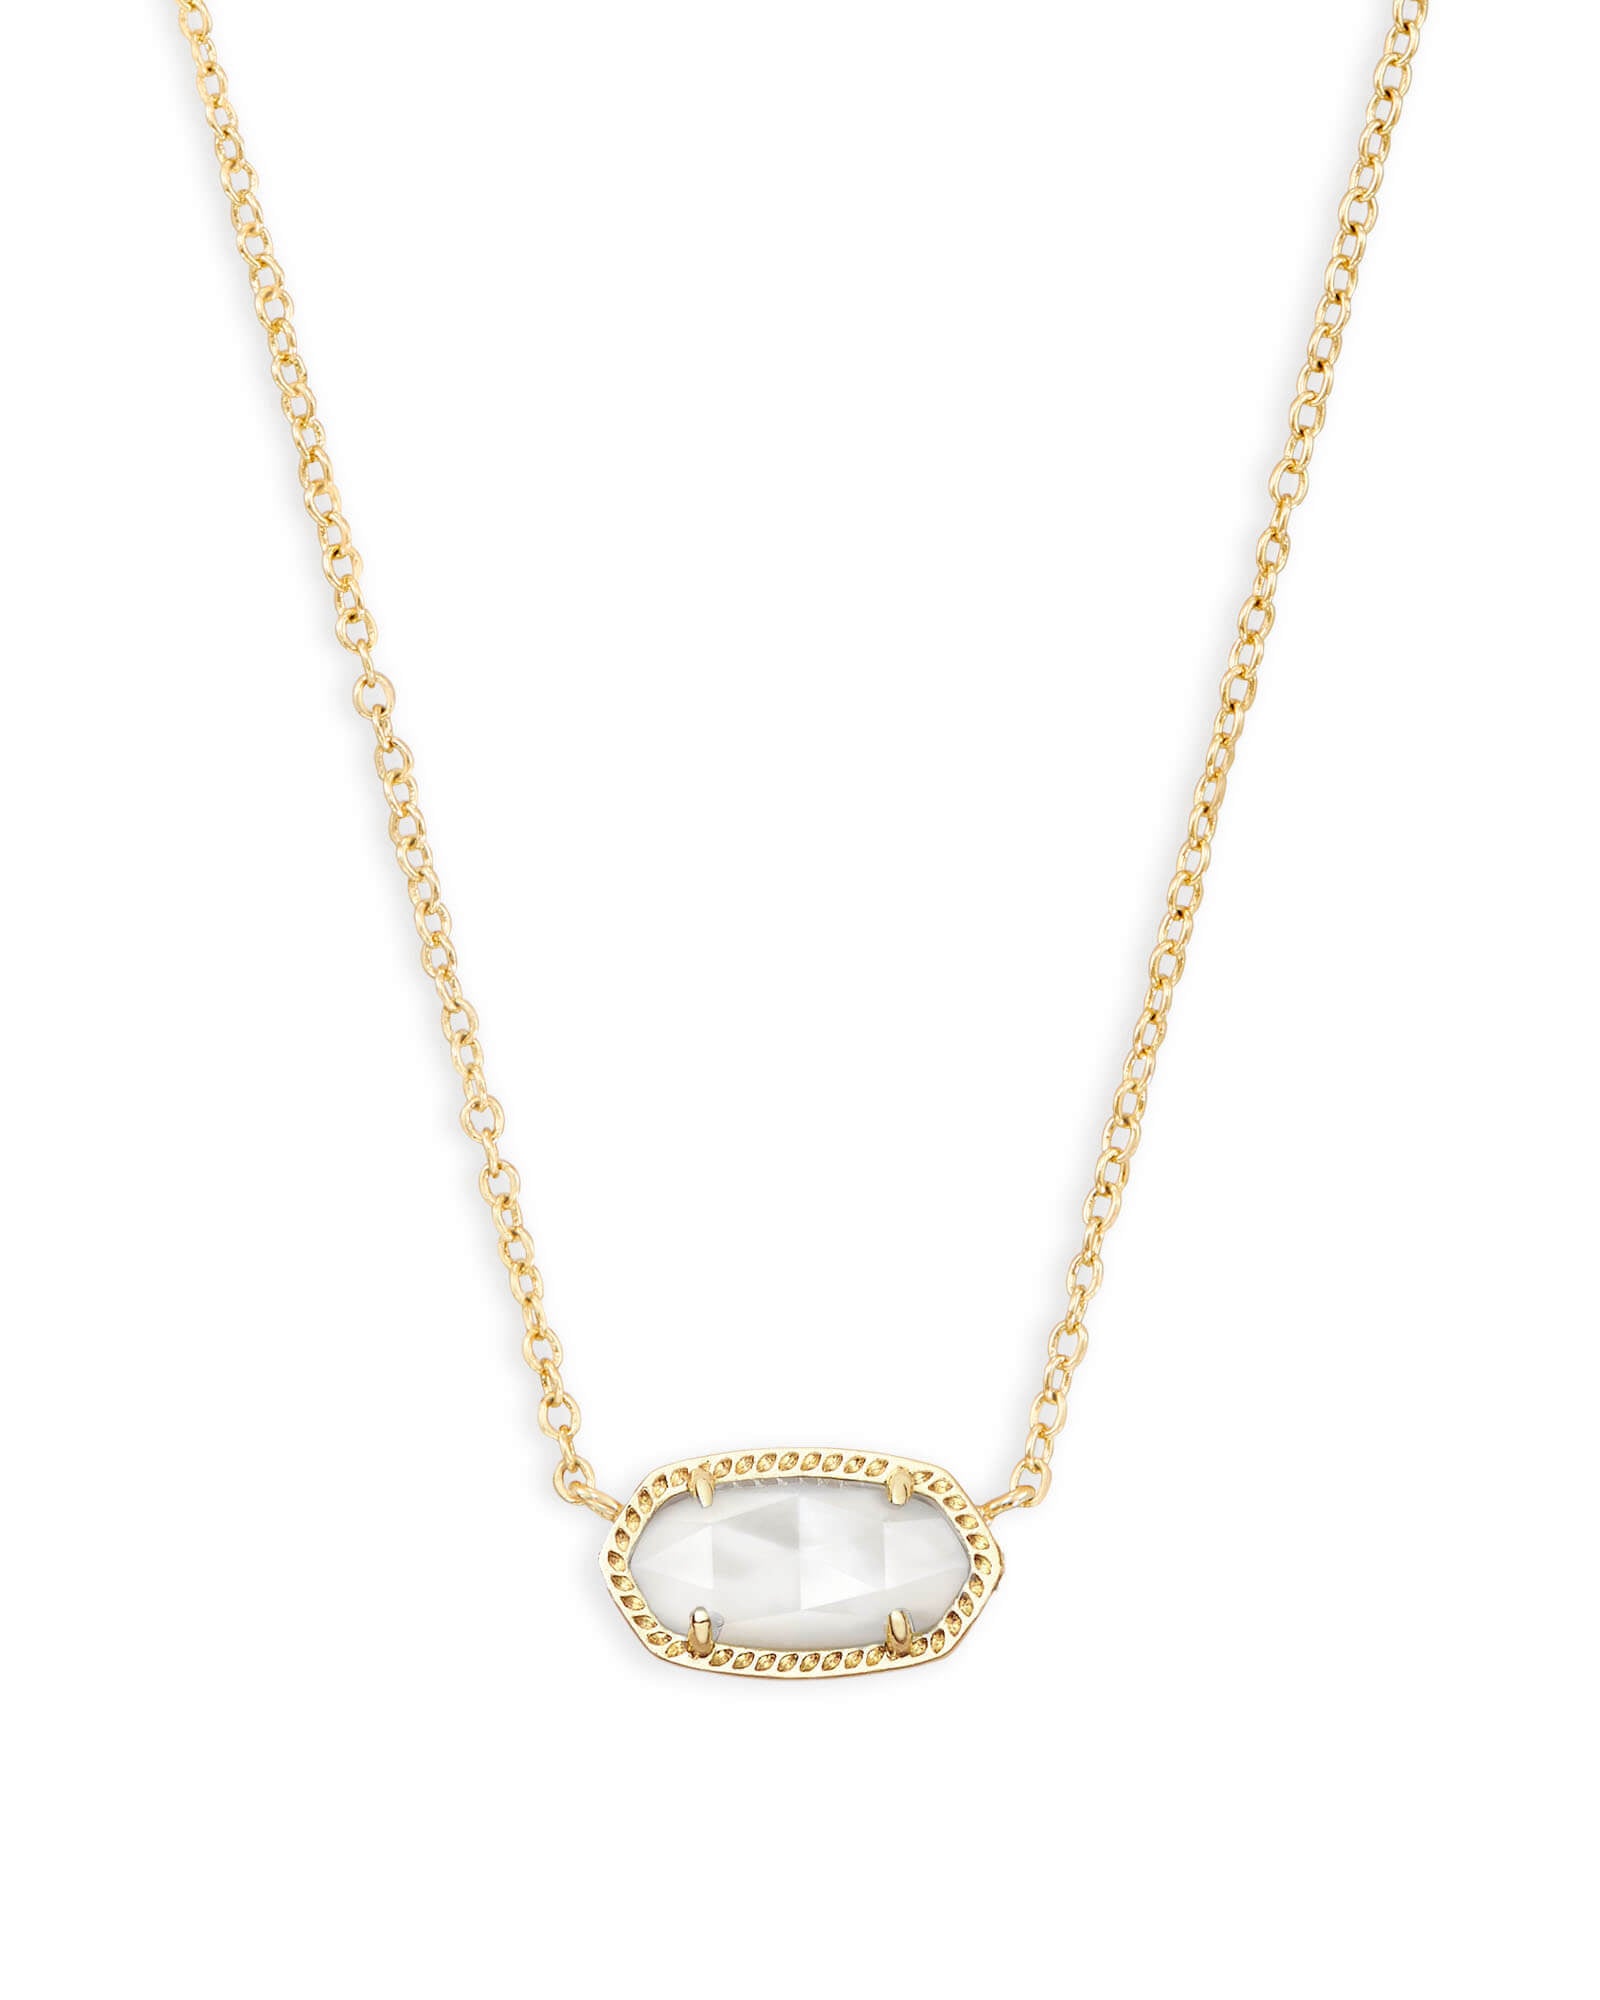 Kendra Scott Elisa Gold Pendant Necklace - Rose Quartz